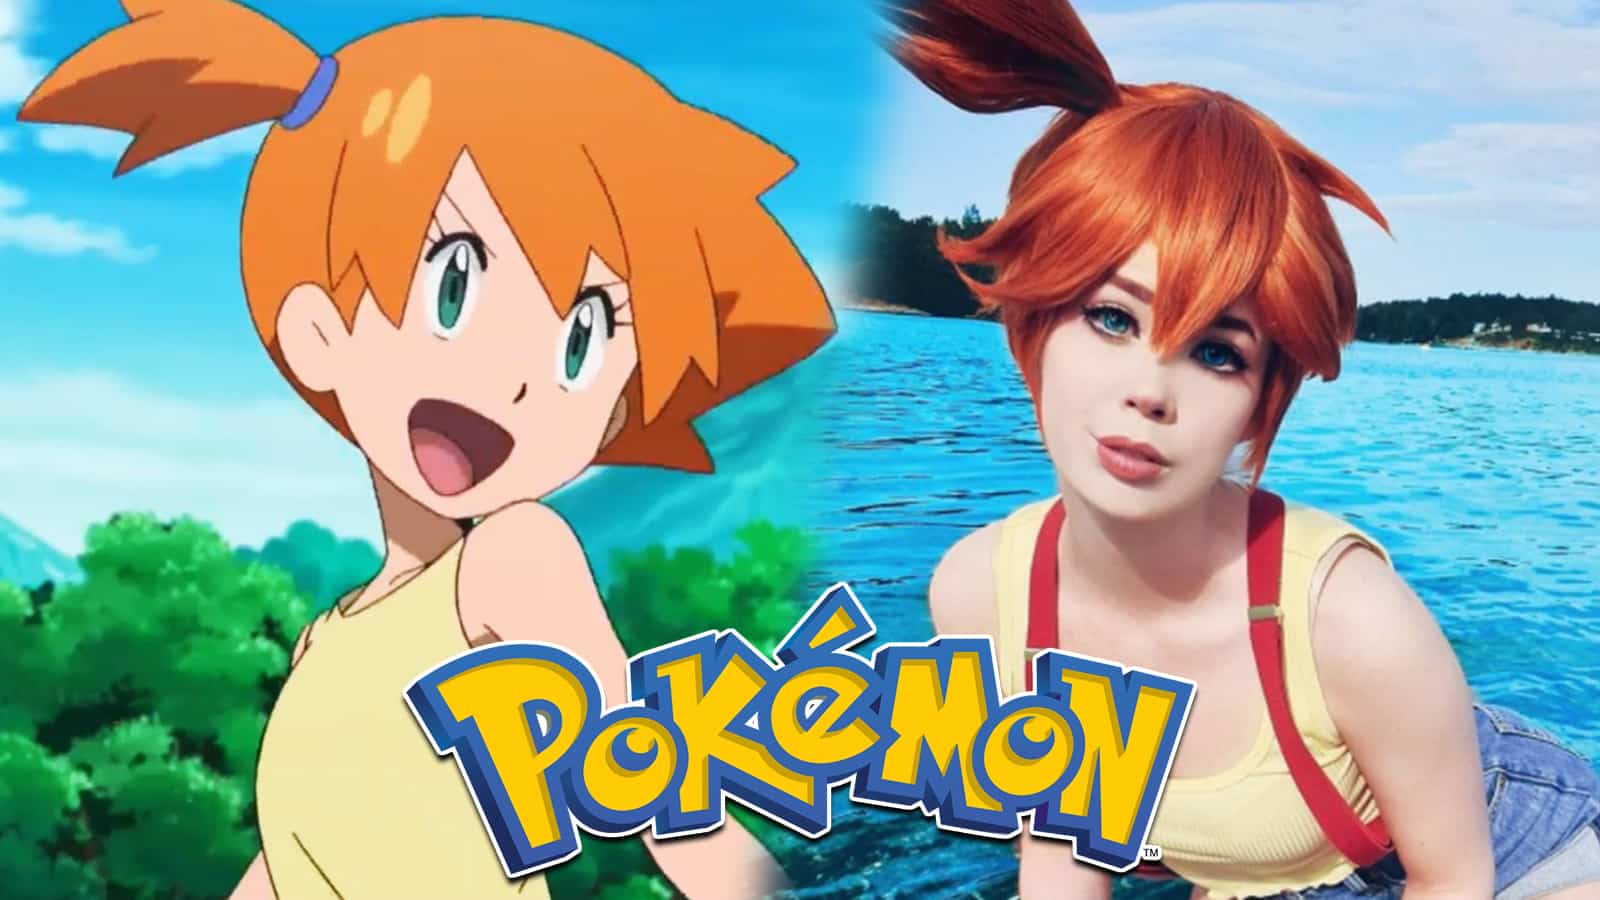 Pokemon Gym Leader Misty next to cosplayer